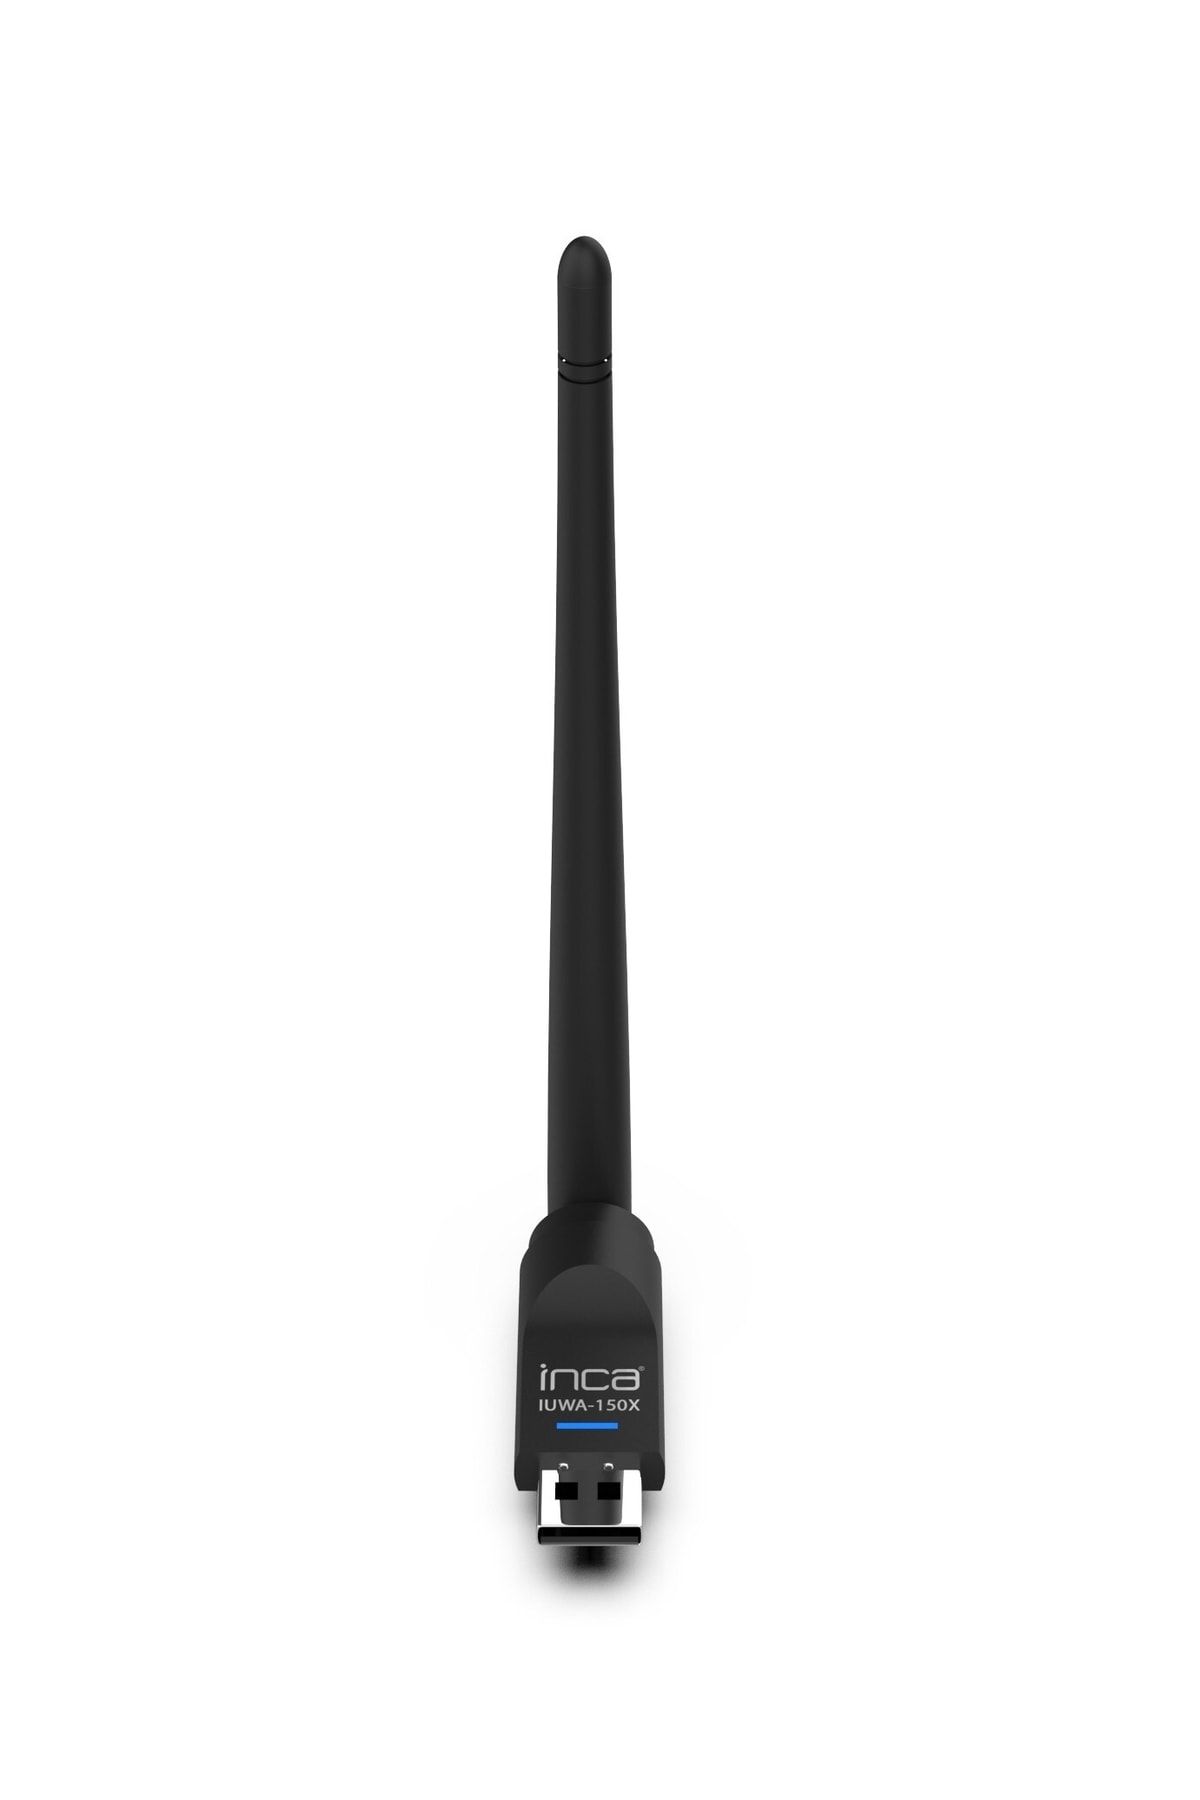 Inca Iuwa-150x 150 Mbps 11n Harici 5dbi Anten Wireless Adaptör